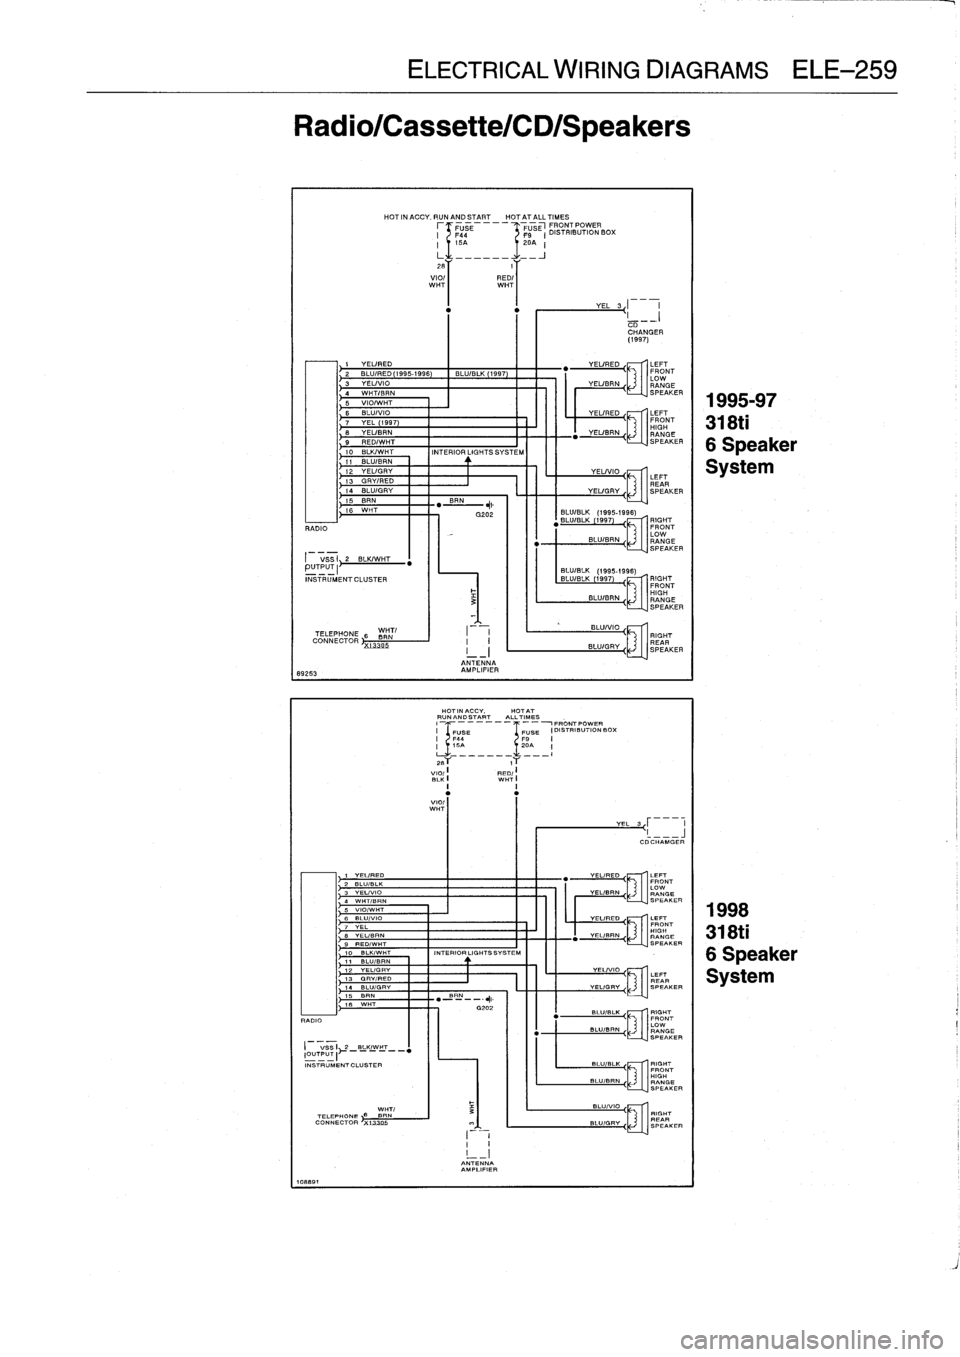 BMW 318i 1997 E36 Workshop Manual 
ELECTRICAL
WIRING
DIAGRAMS
ELE-259

Radio/Cassette/CD/Speakers

RADIO

I
VSSI
2
BLK/WHT
pUTPUTI~~
INSTRUMENT
CLUSTER

89253
RADIO

I

	

V
SS
I
r
2
-
B-K-W-7
~
1=UUTPU-I
INSTRUMENTCLUSTER

1-891

1
0